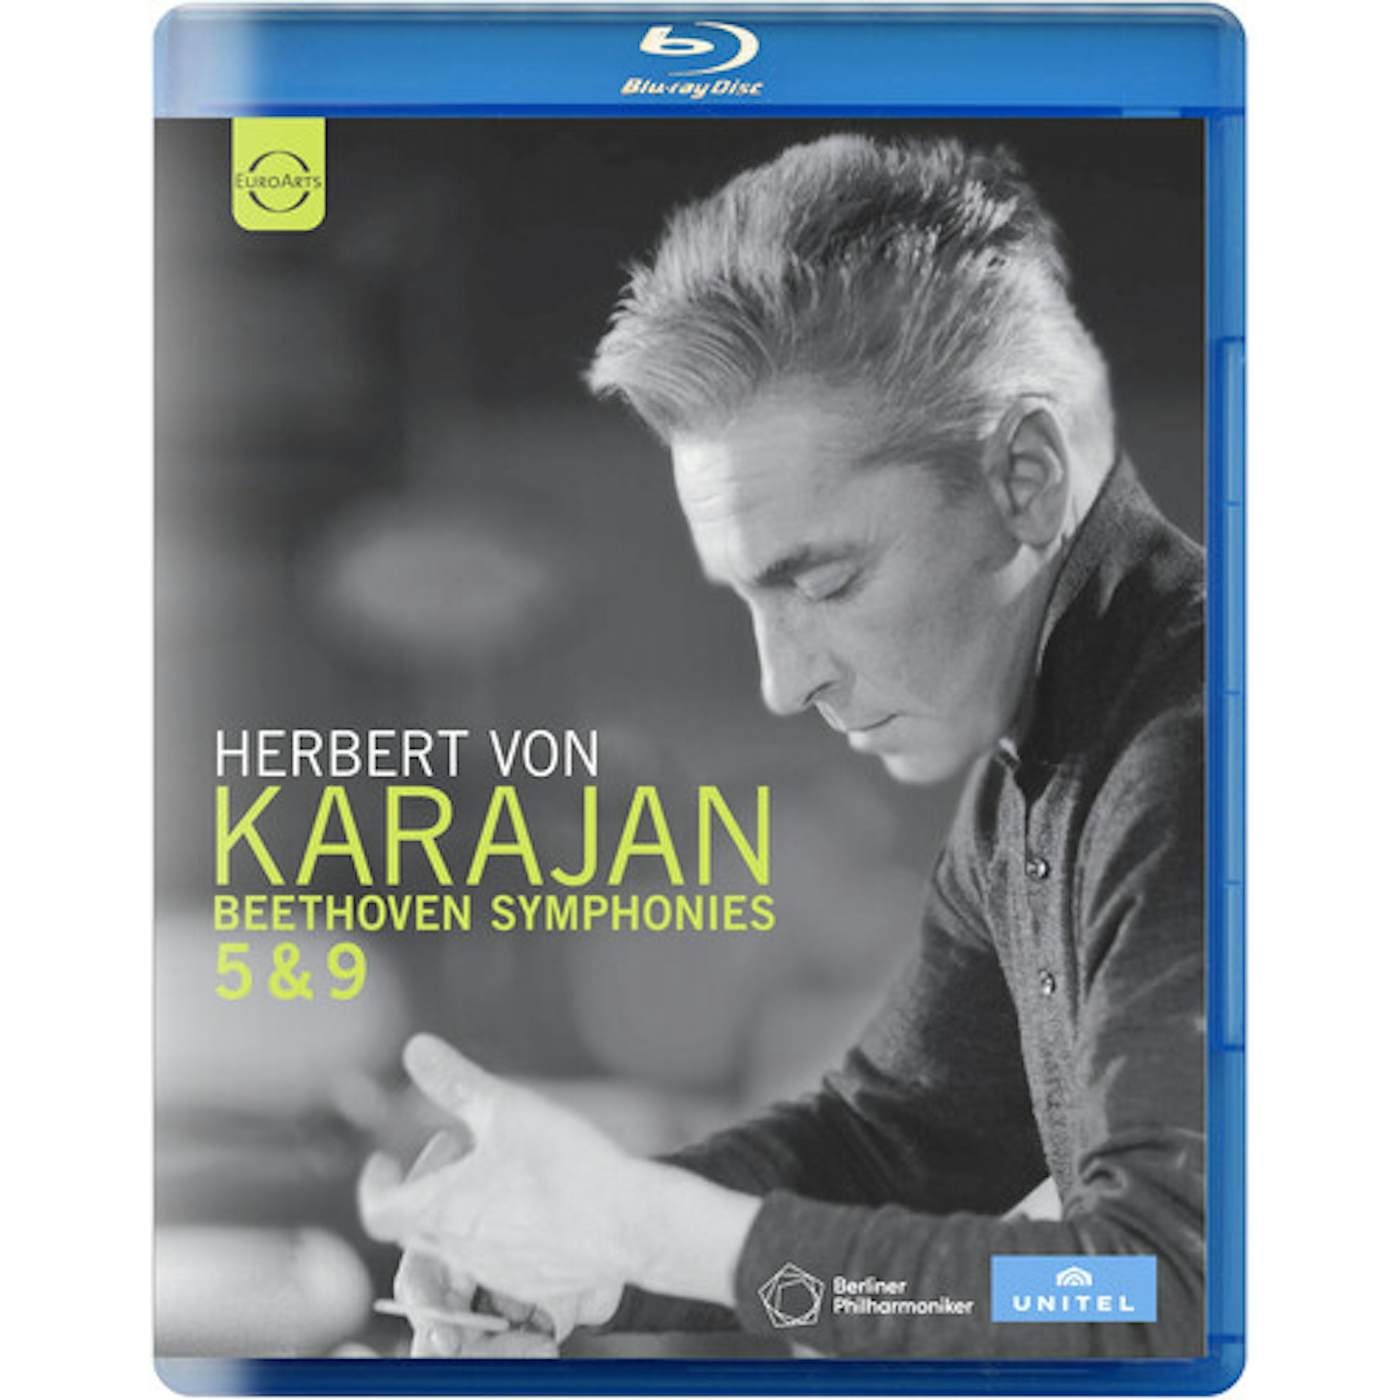 Herbert von Karajan CONDUCTS BEETHOVEN SYMPHONIES NOS. 5 & 9 Blu-ray